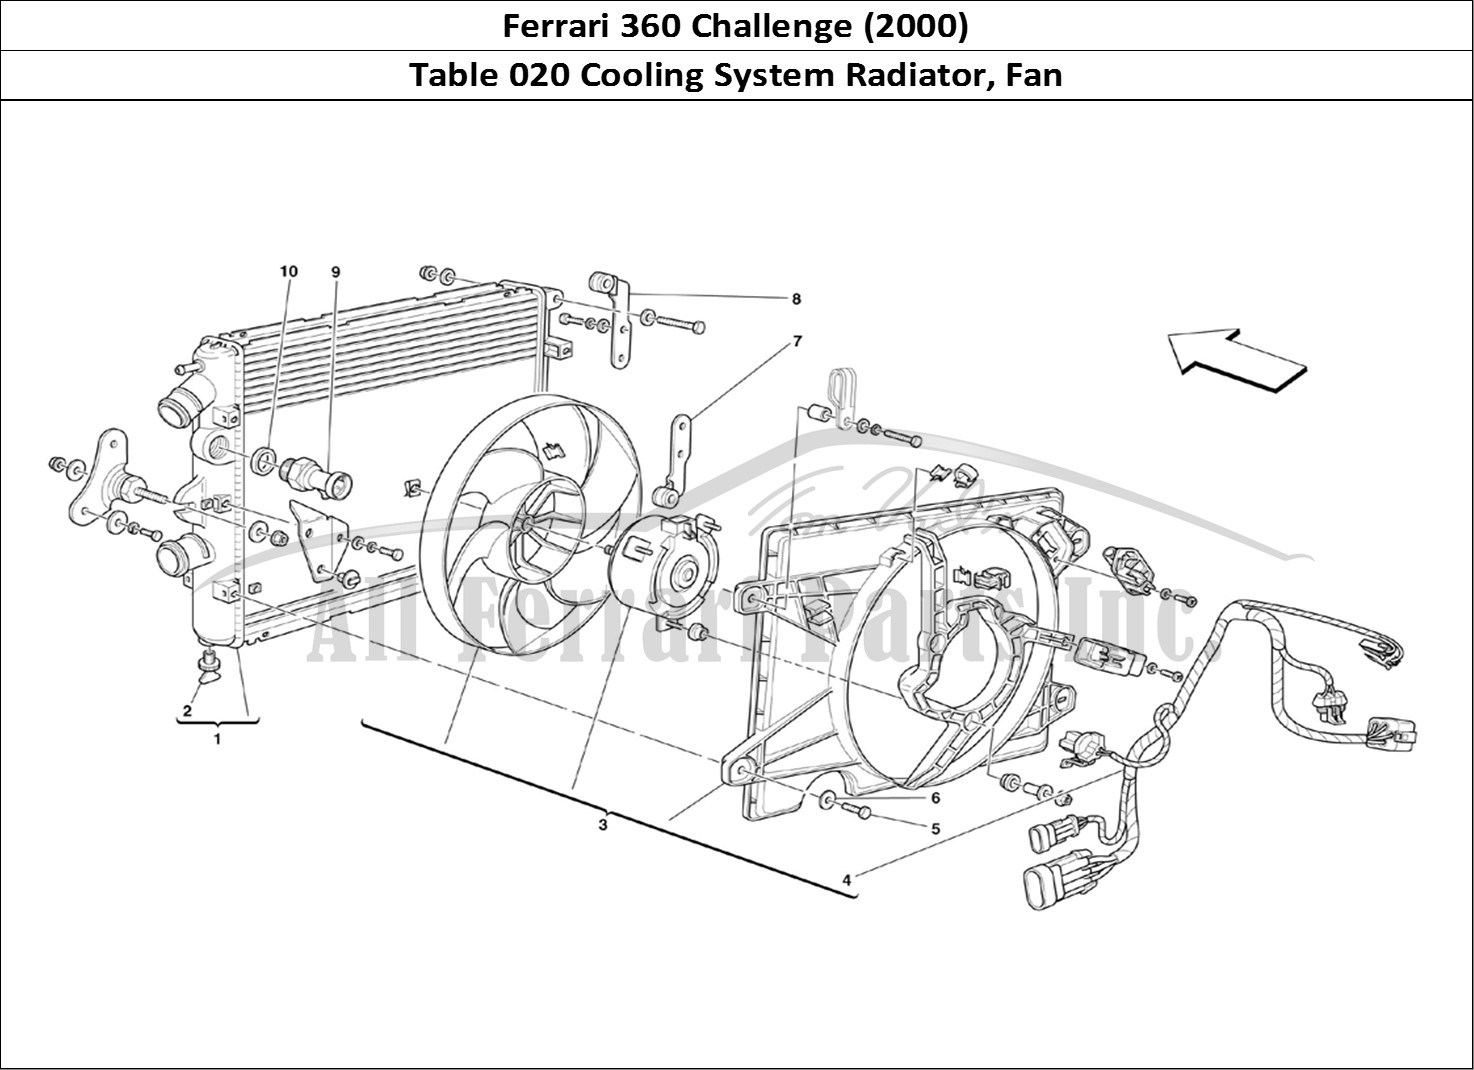 Ferrari Parts Ferrari 360 Challenge (2000) Page 020 Cooling System Radiators